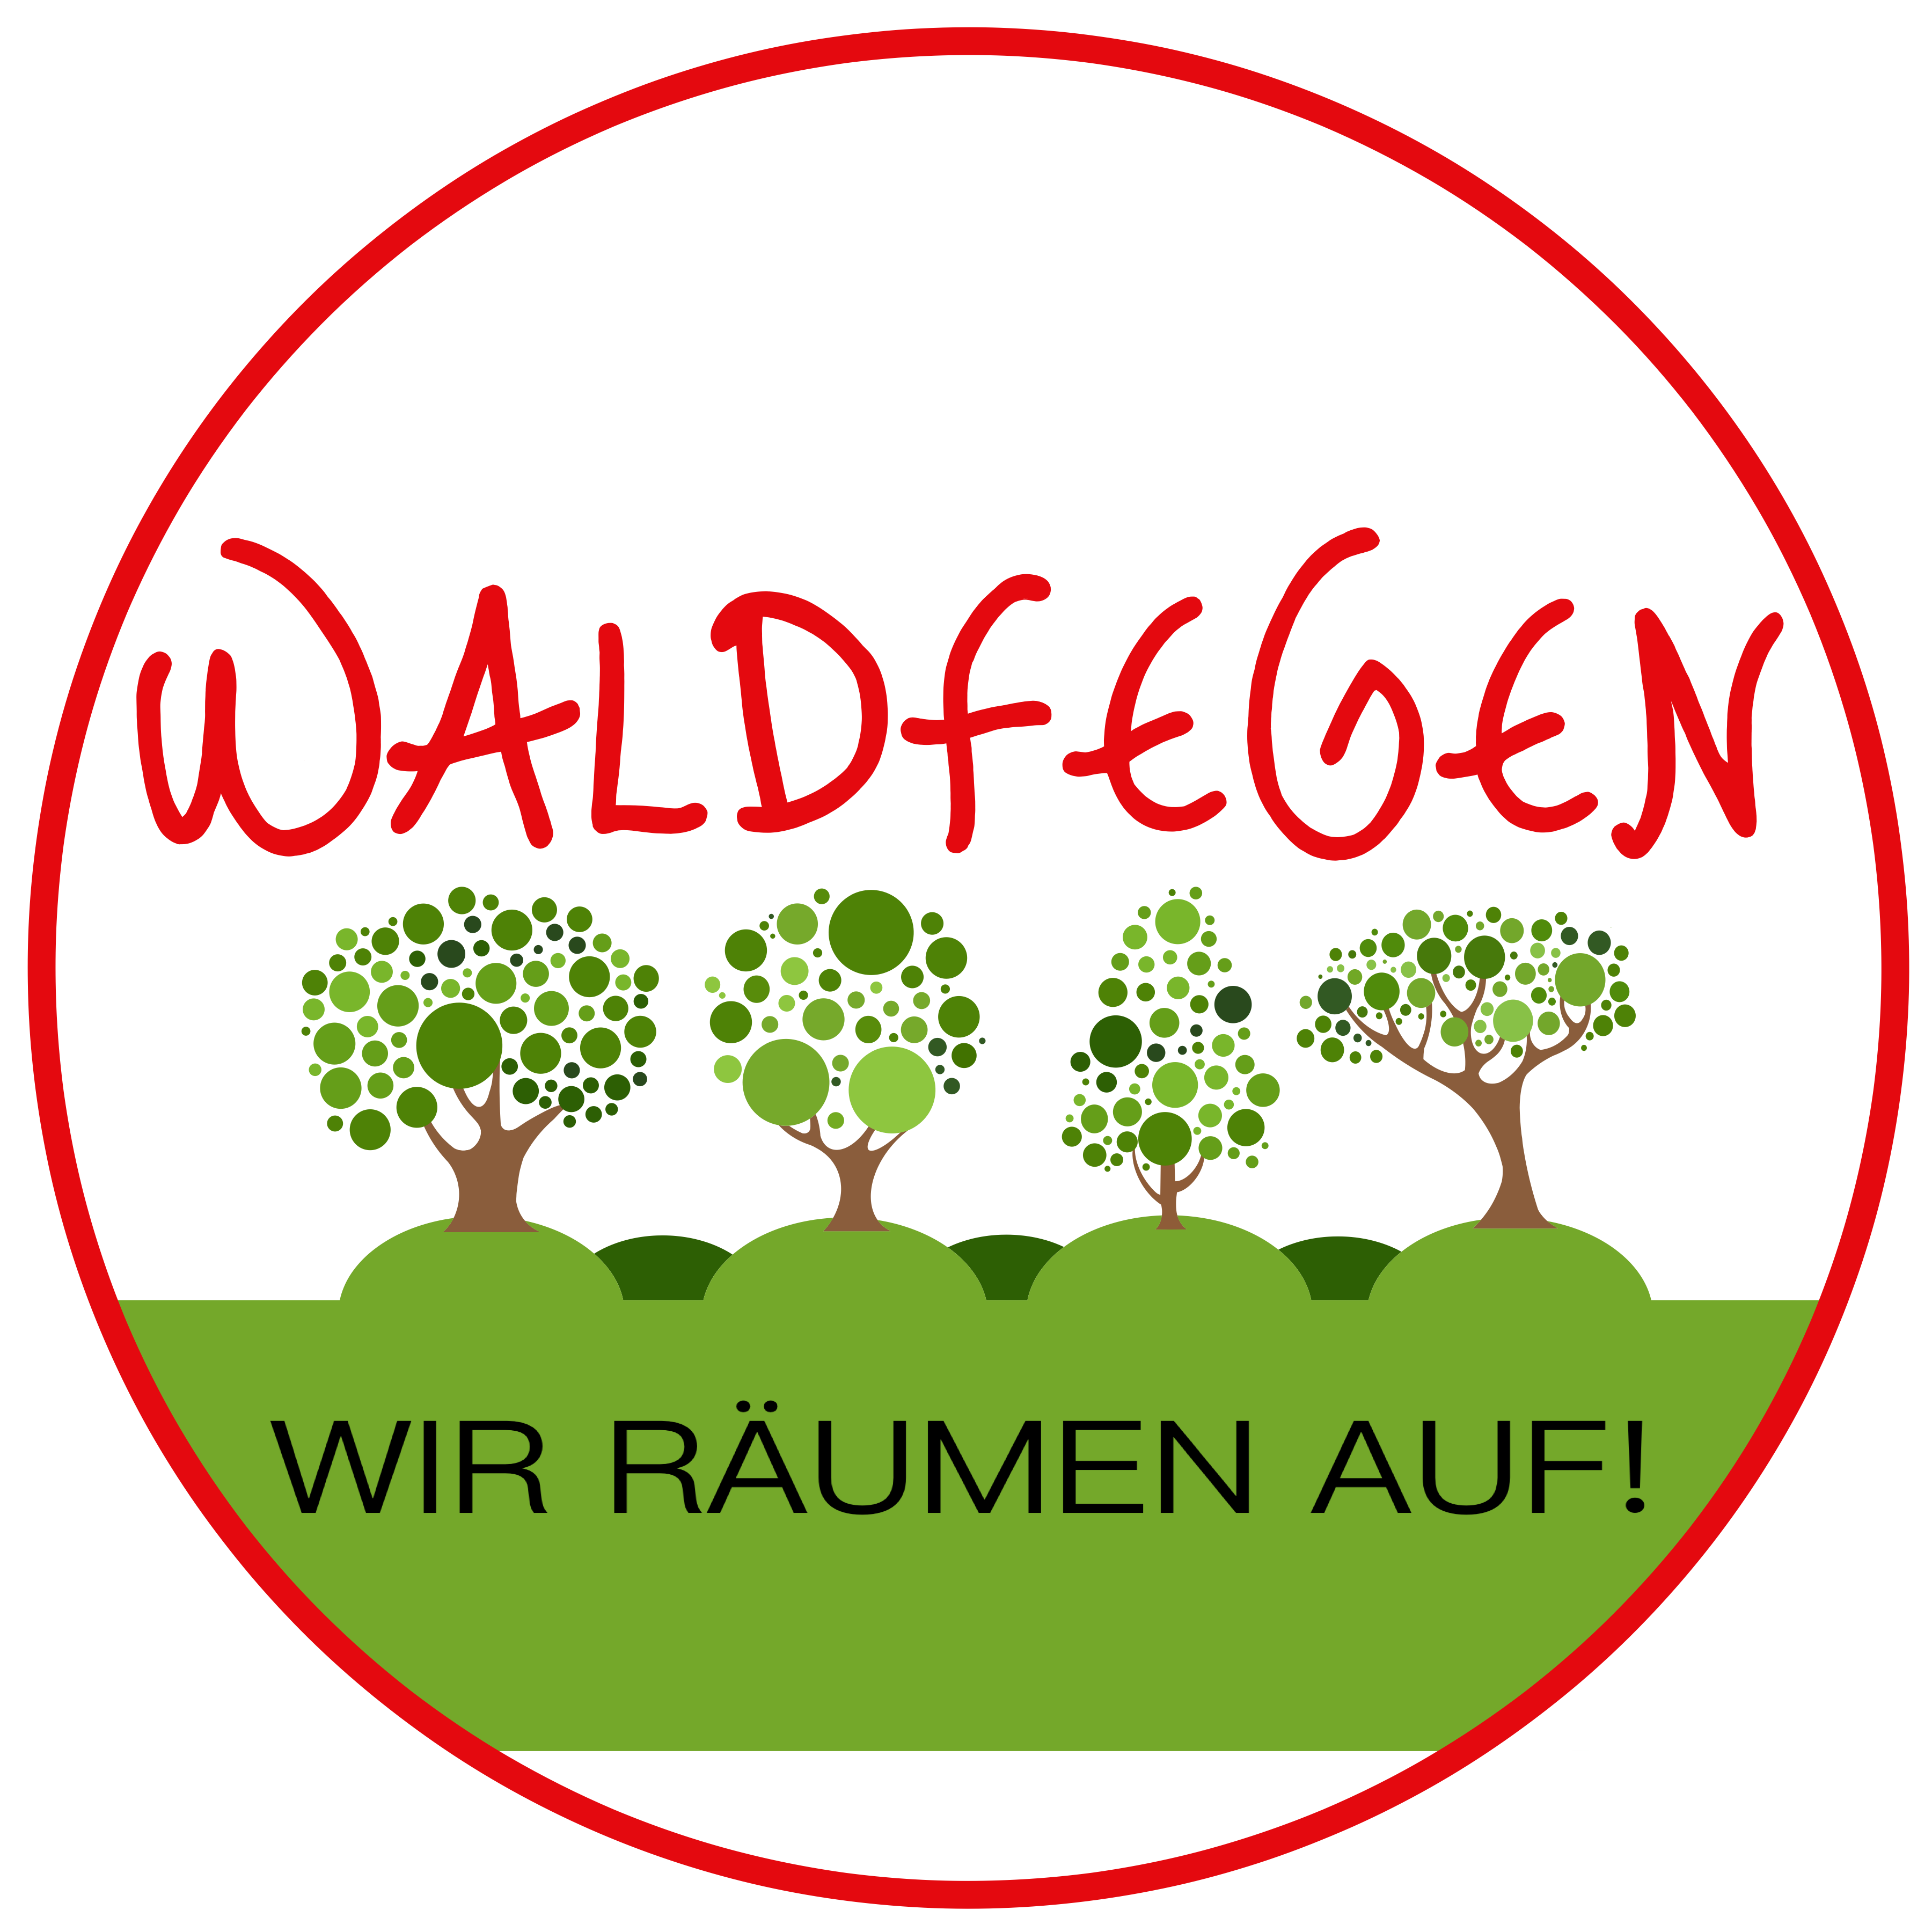 (c) Waldfegen-ev.de